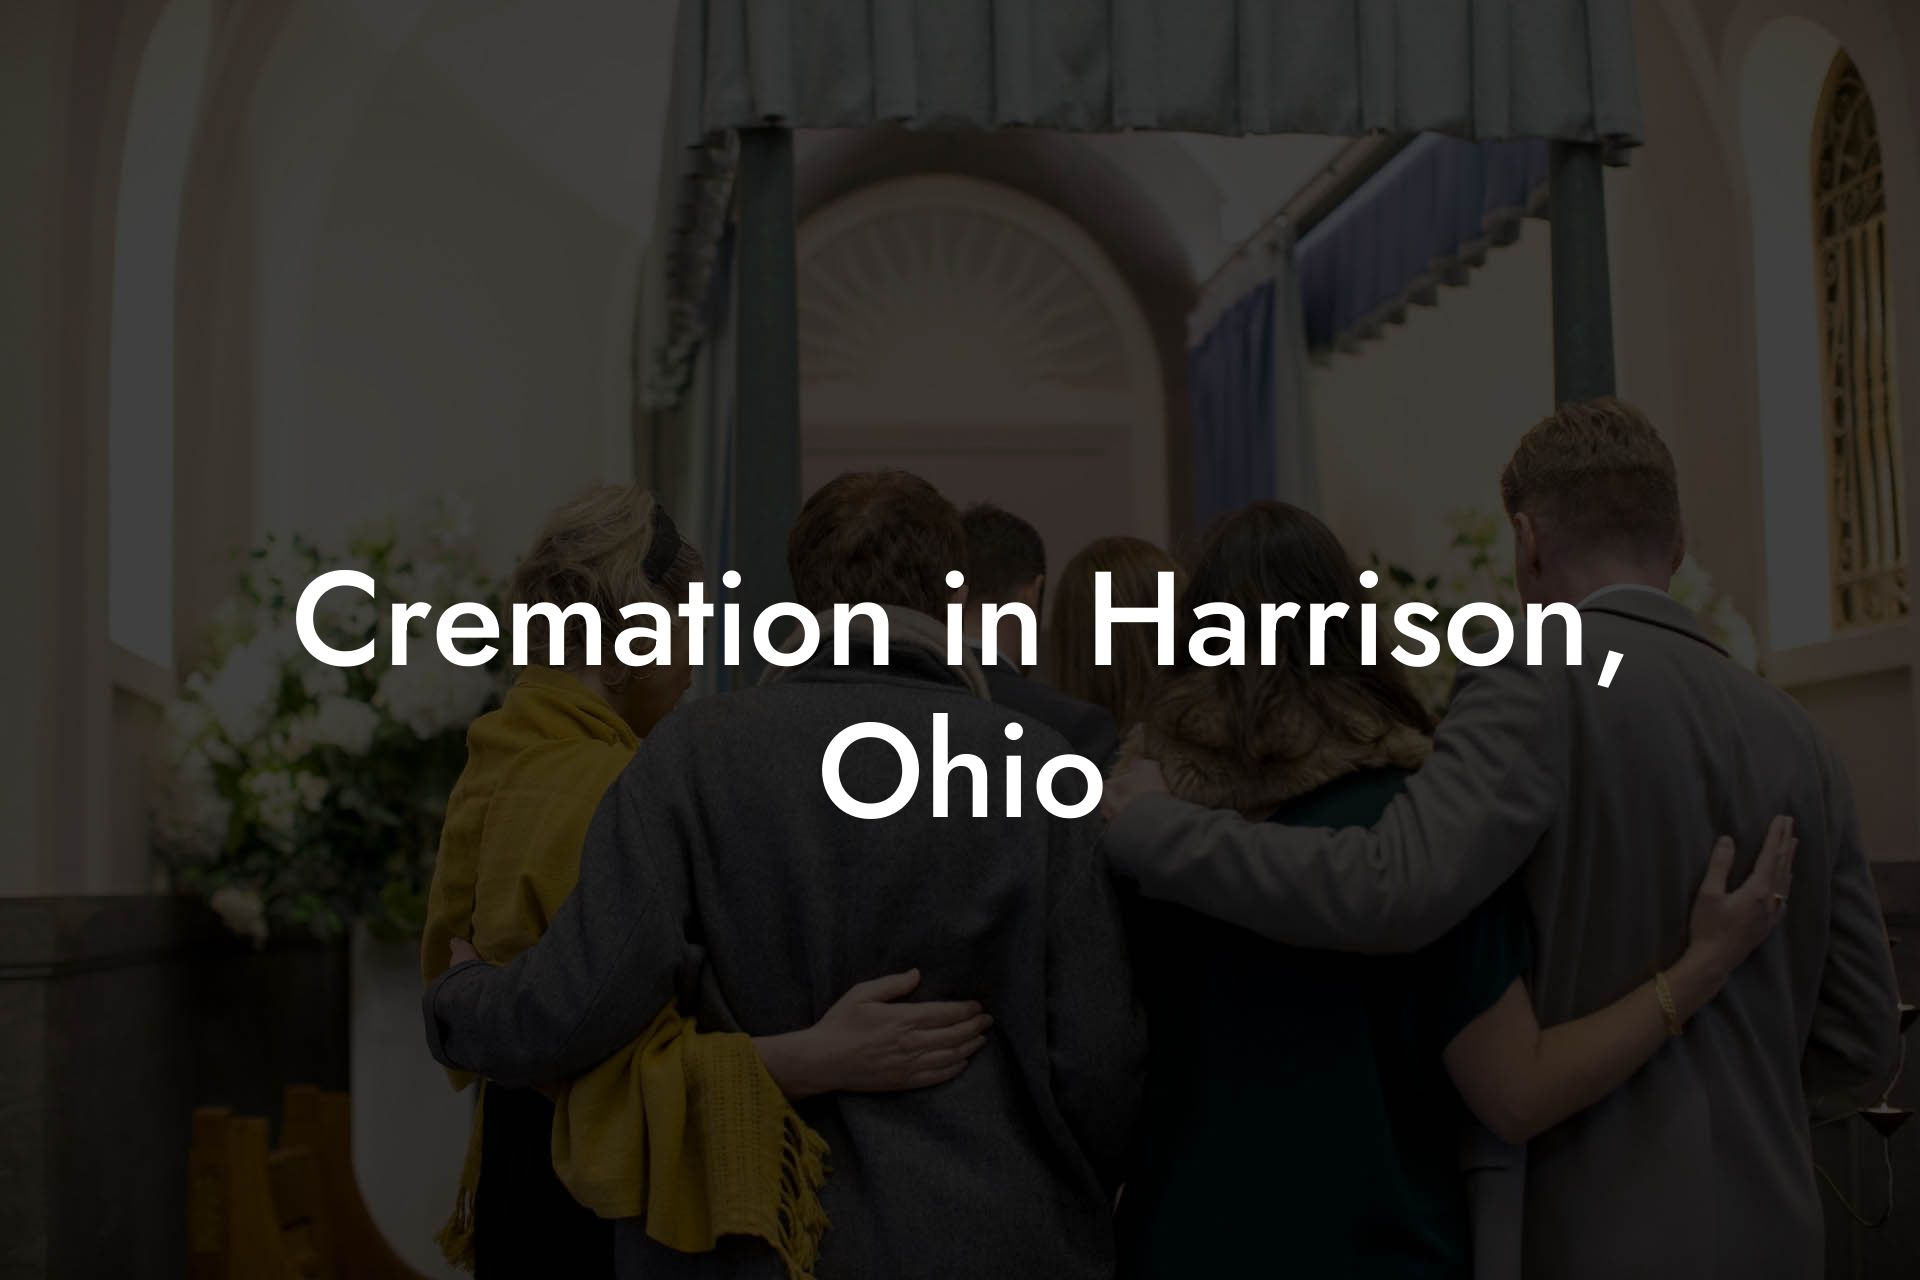 Cremation in Harrison, Ohio